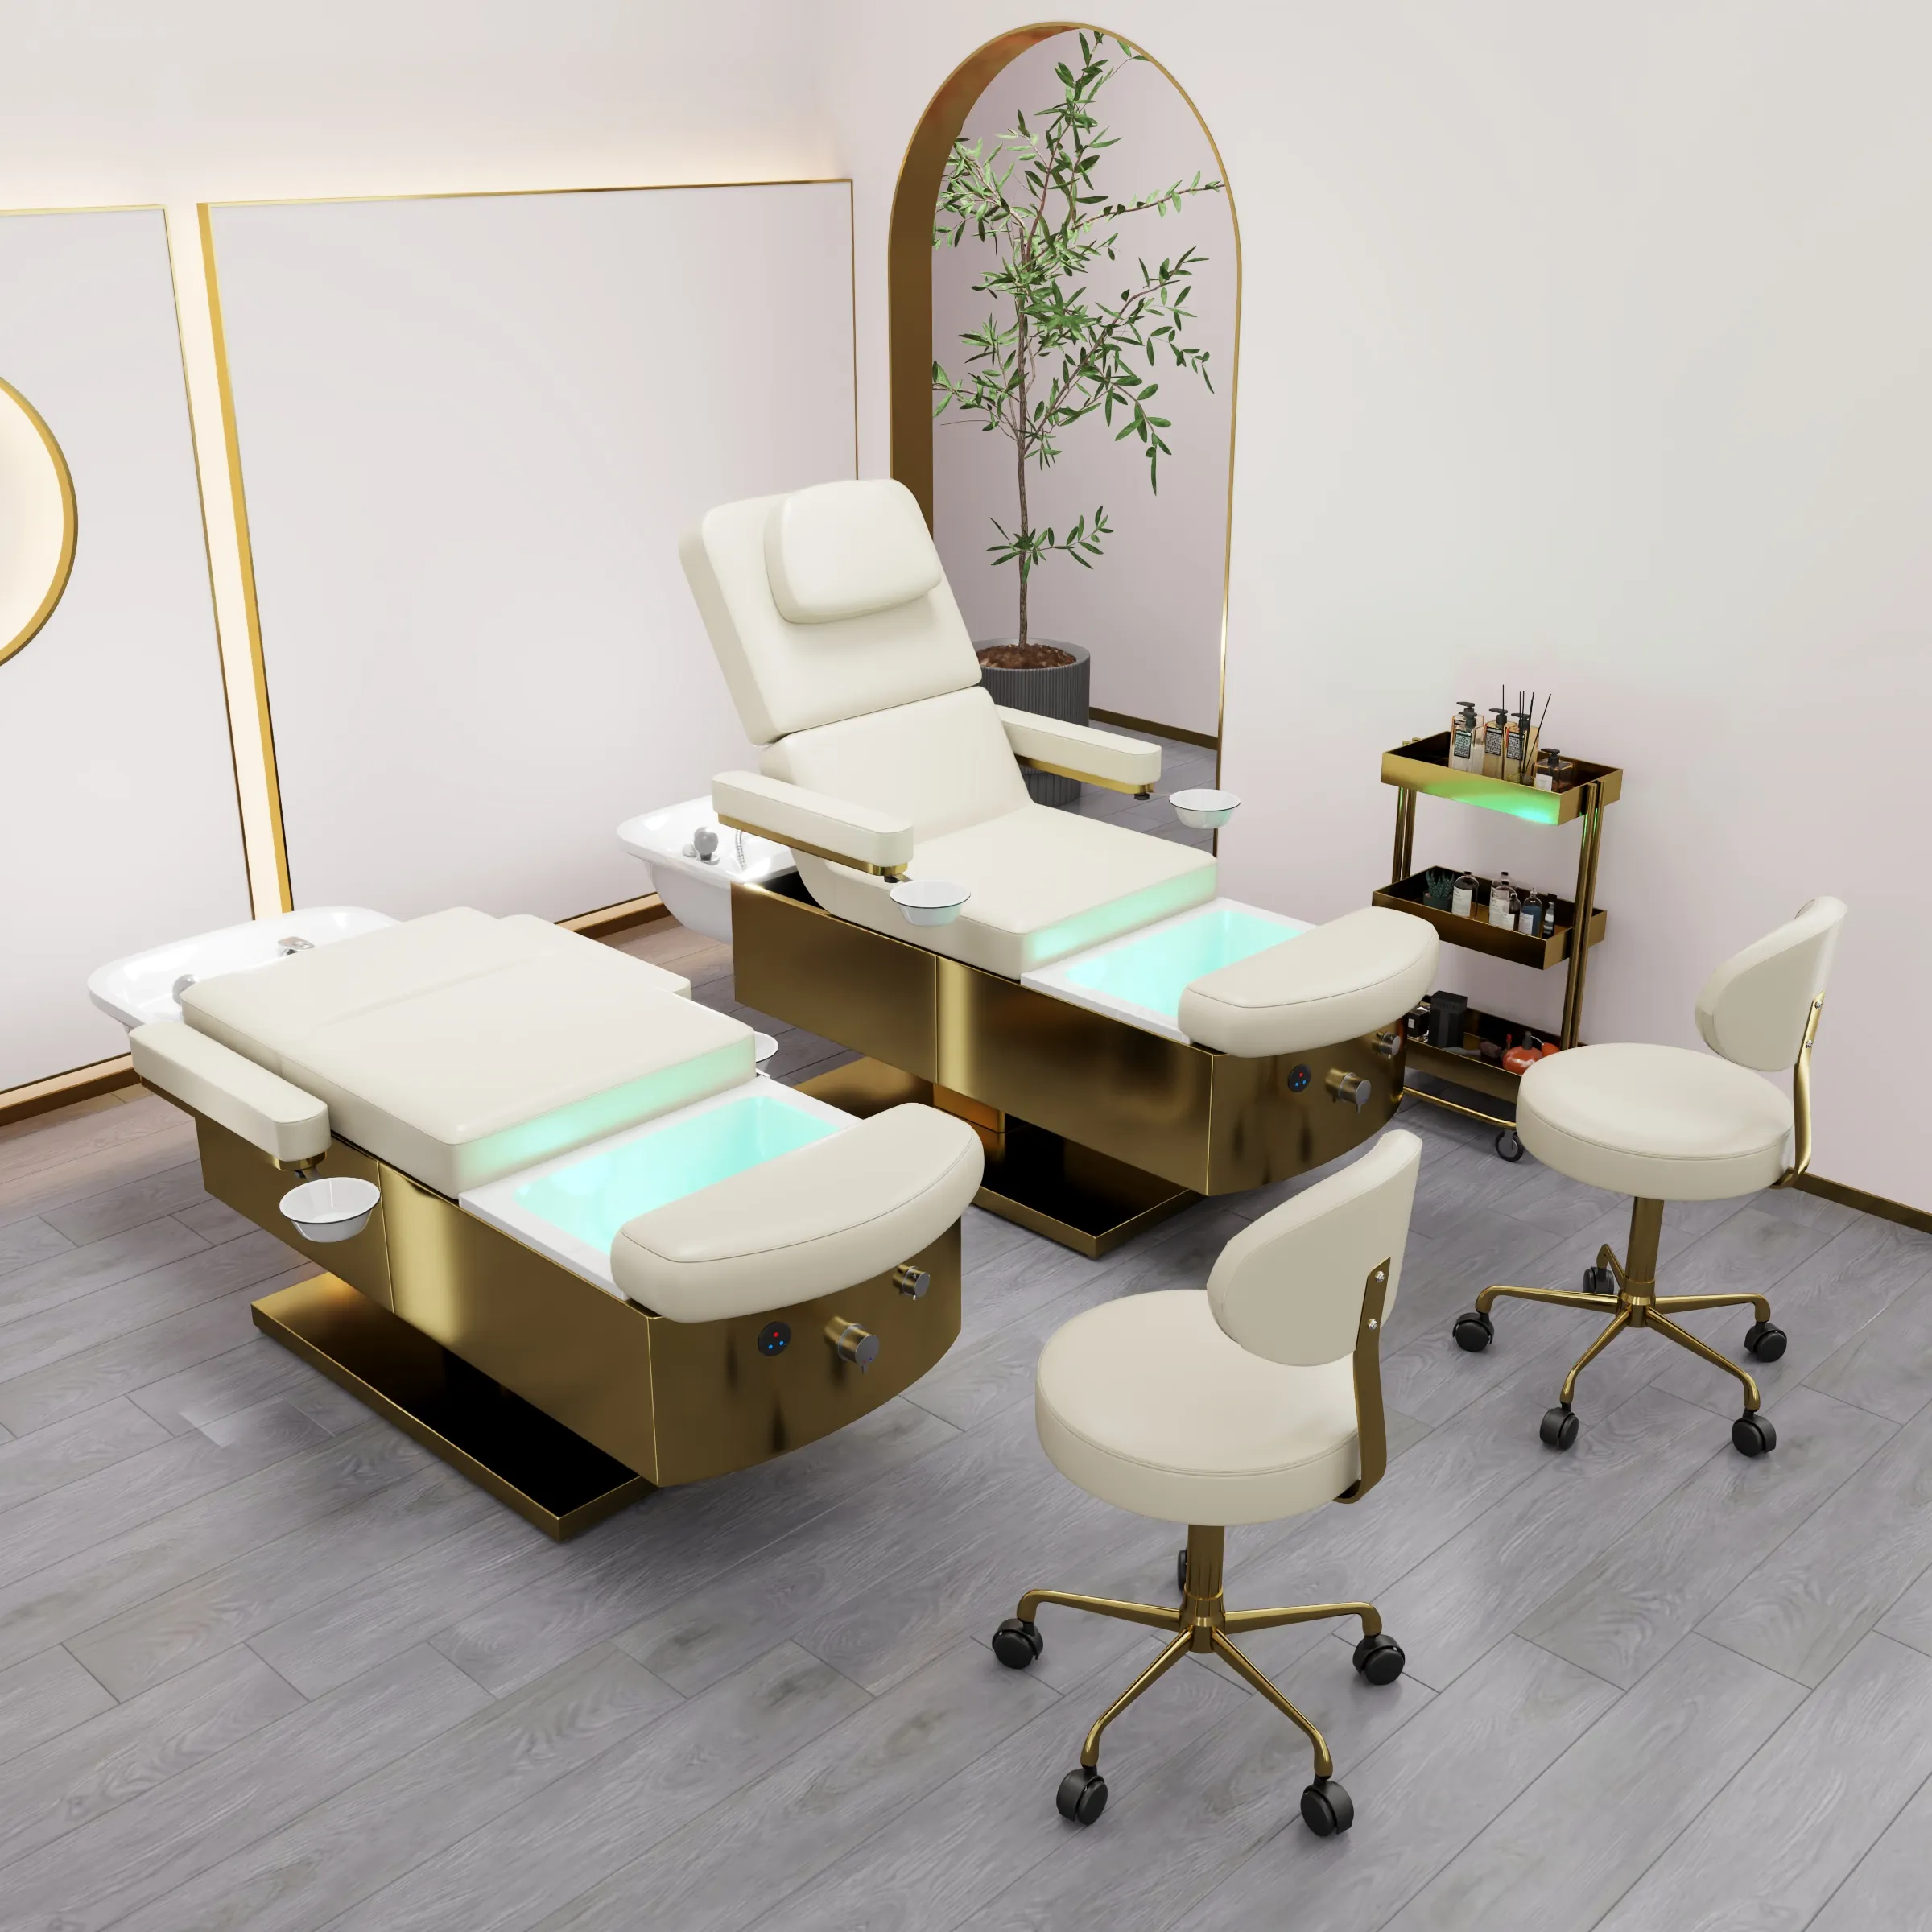 HOCHEY Salon spa water circulation Hair Washing Massage Chair Pedicure shampoo bed